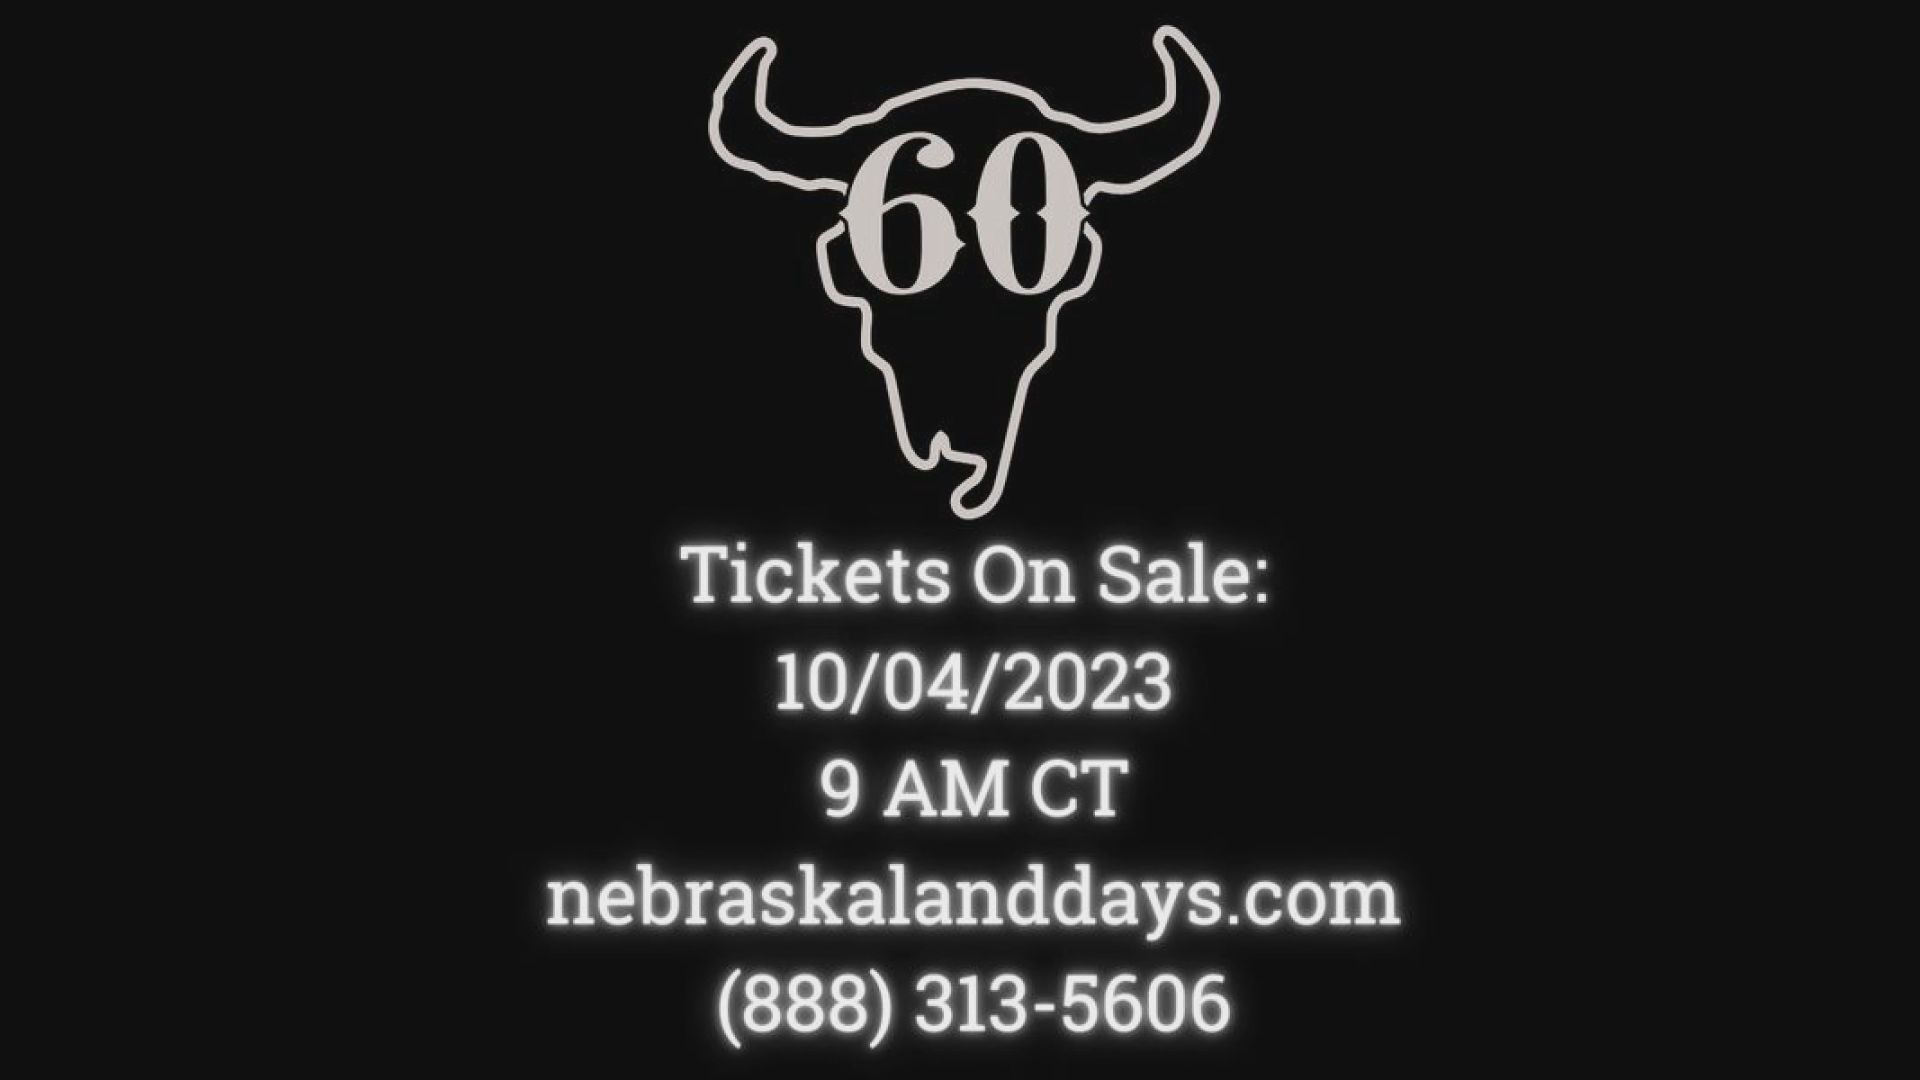 NEBRASKAland Days concert tickets go on sale Wednesday